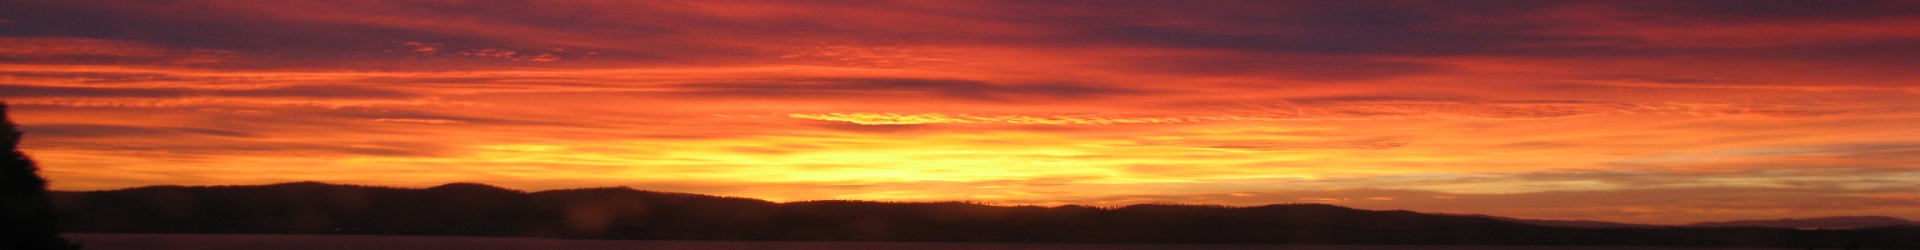 Sunrise over River Derwent